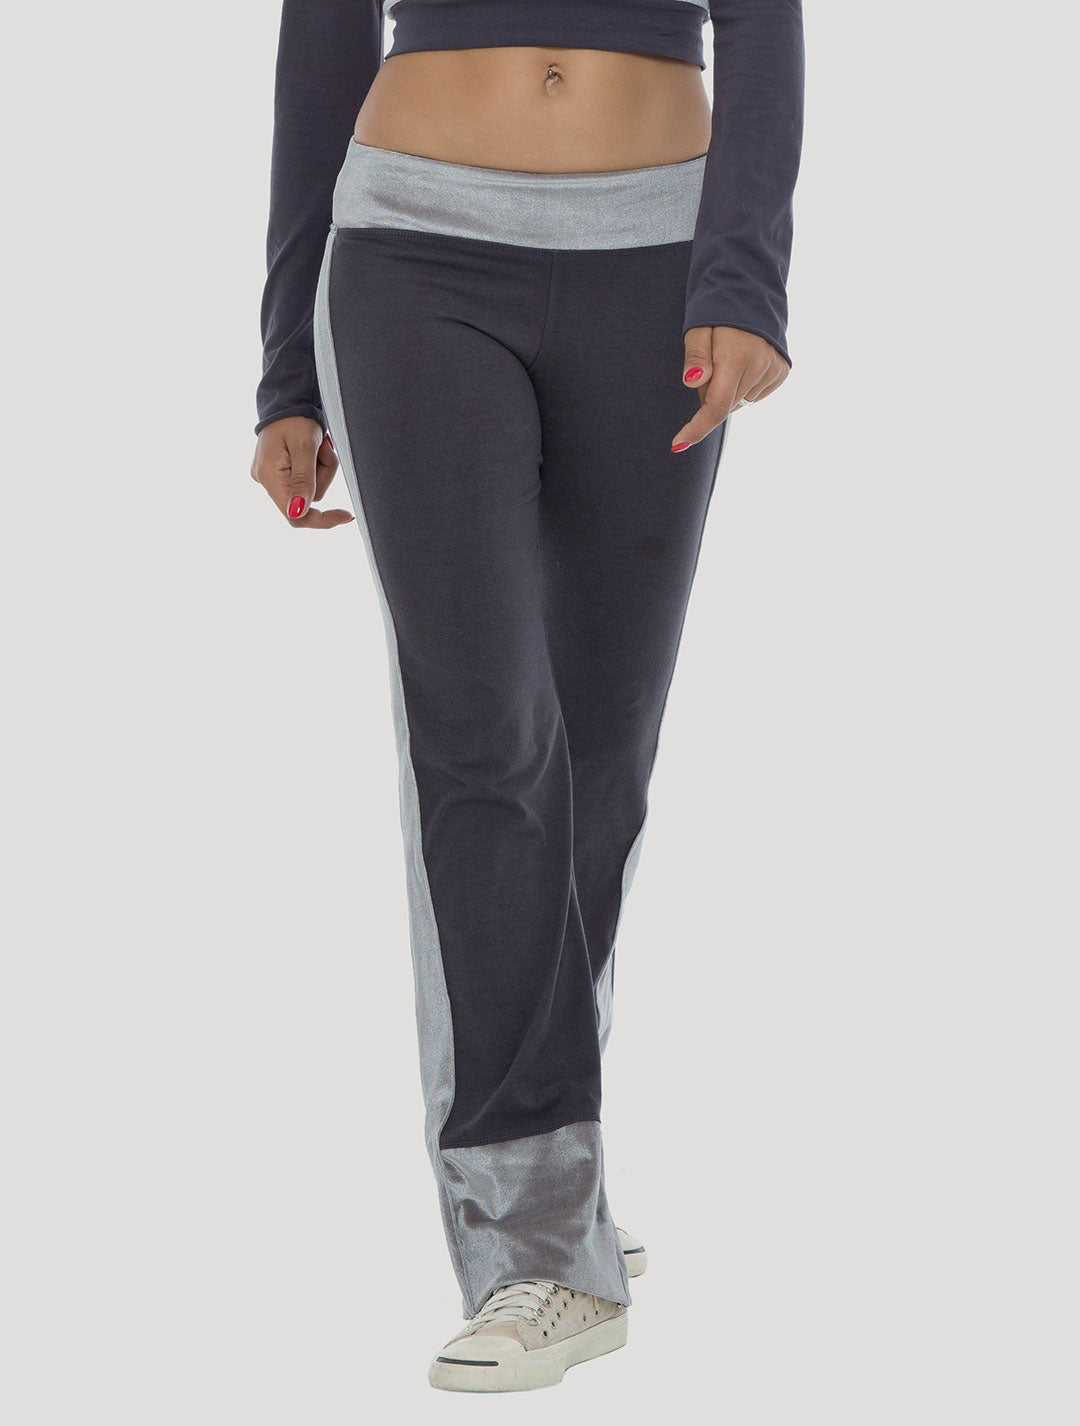 EVERLAST Woman's Slate Grey Stretch cotton leggings with Everlast